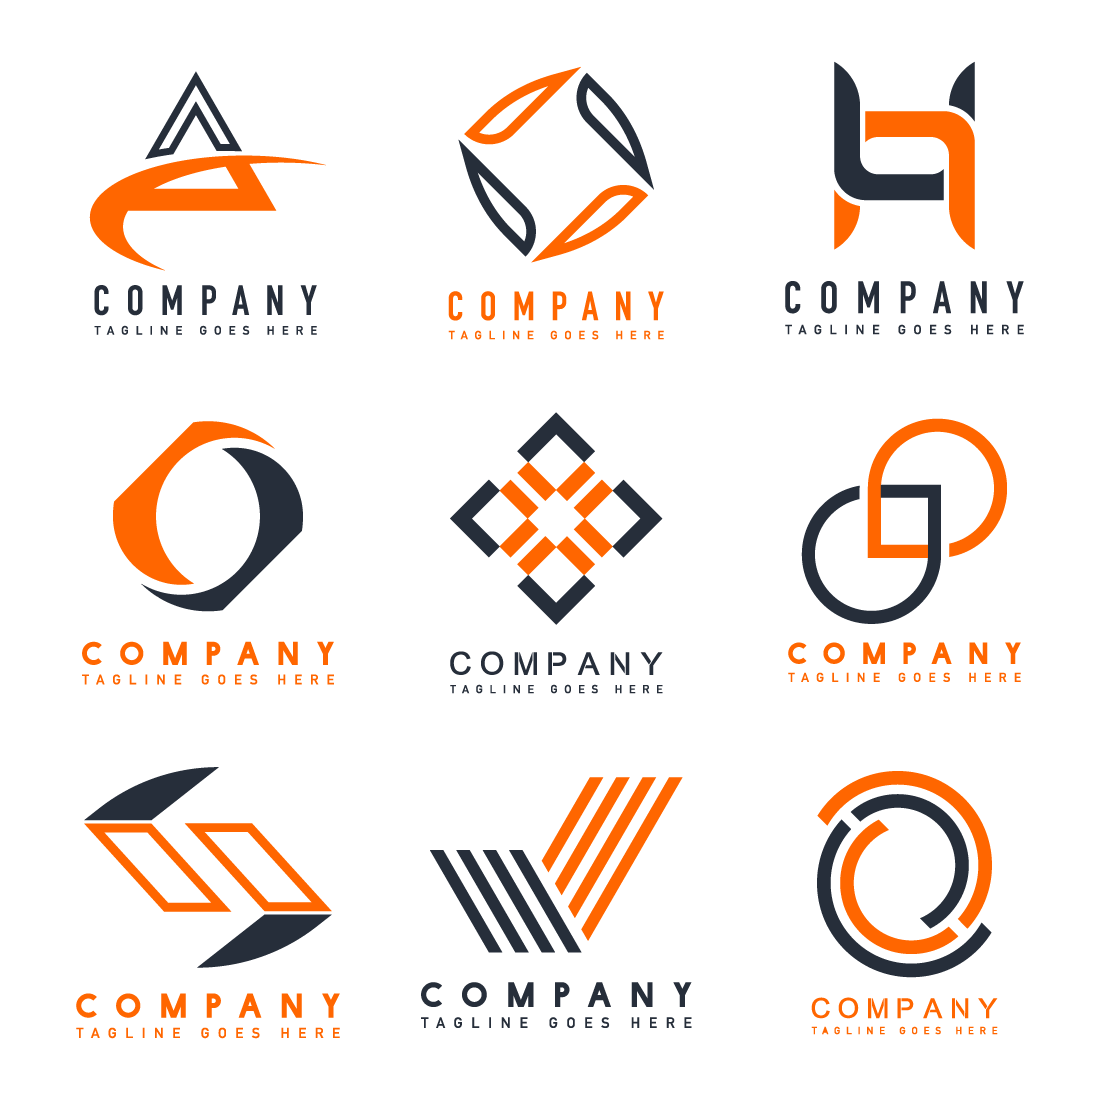 Set company logo Design ideas vector preview image.